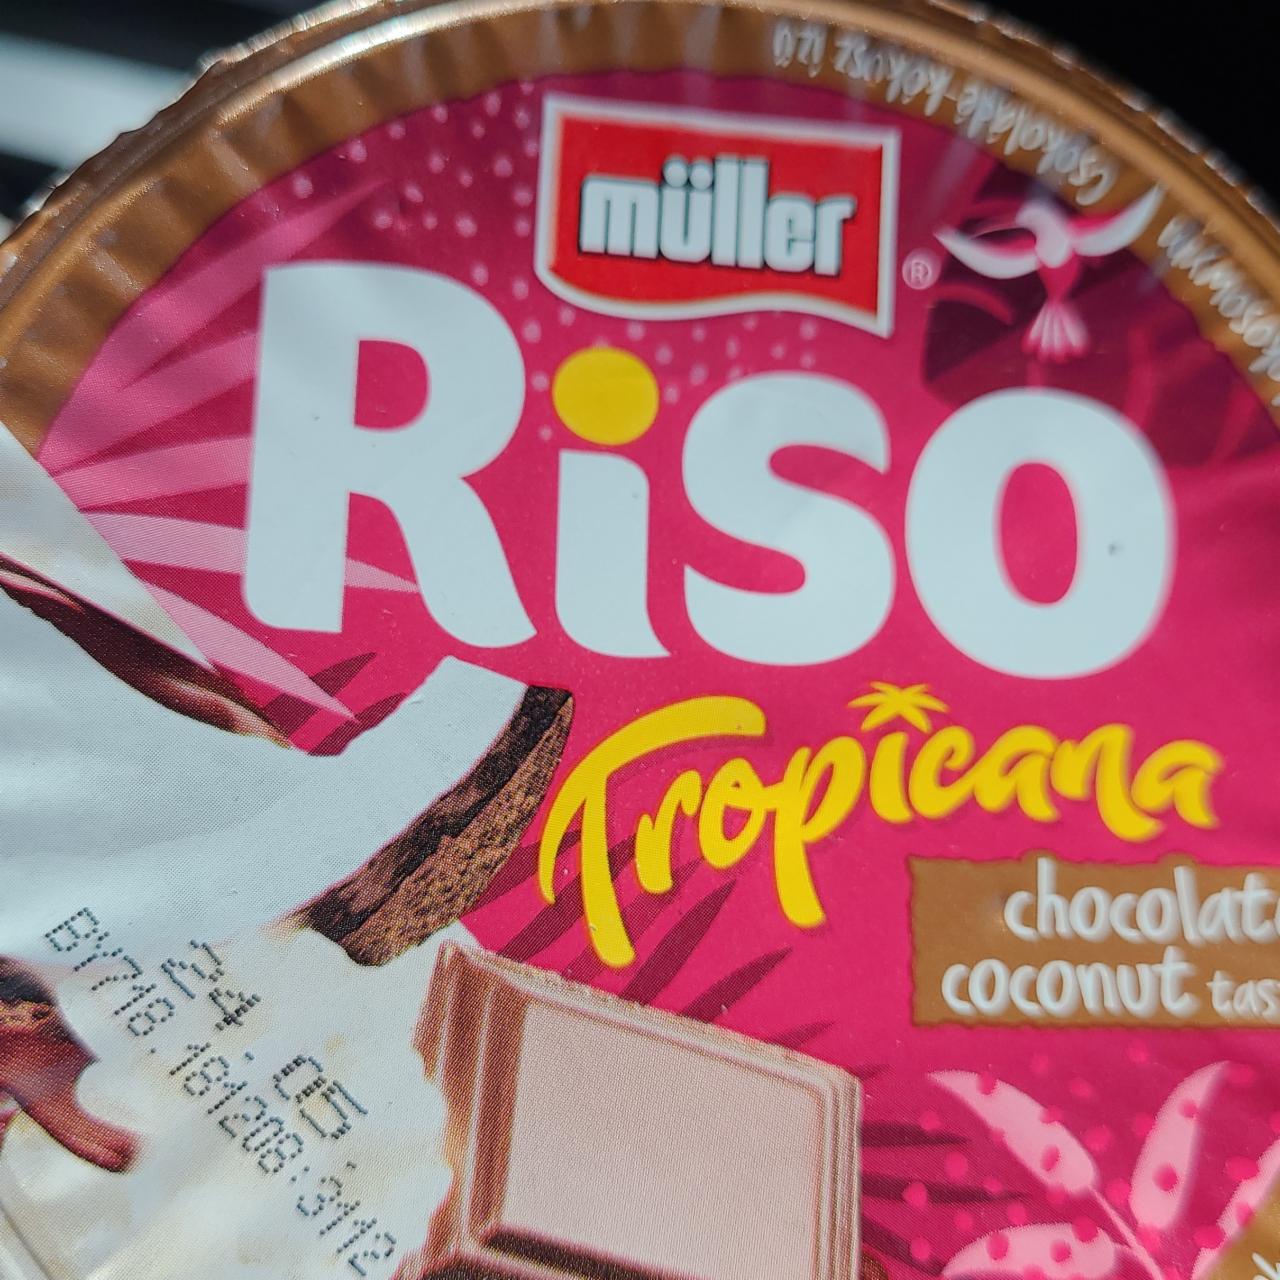 Fotografie - Riso Tropicana chocolate coconut taste Müller